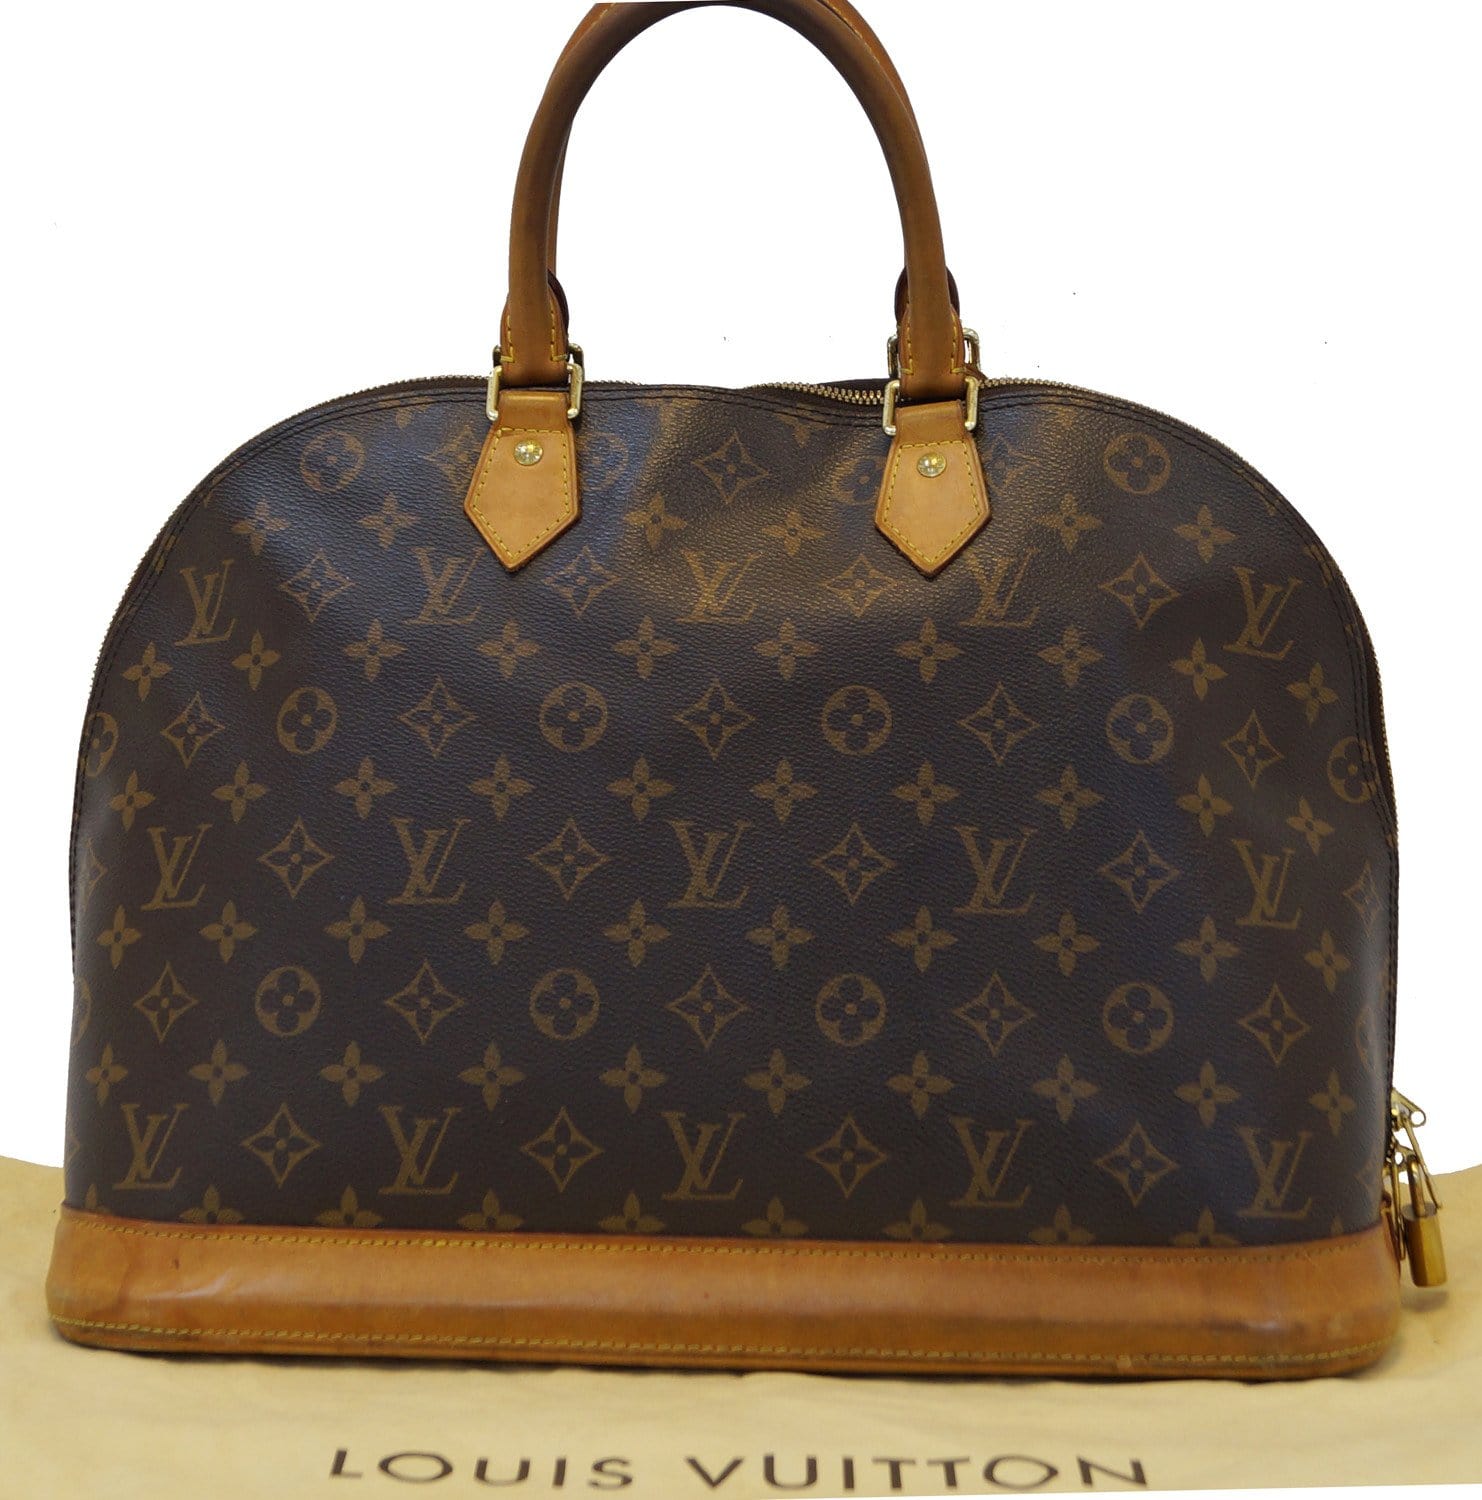 BRAGMYBAG - The Louis Vuitton Alma Bag 😍 - Image @agnesesworld #chanel  #chanelbag